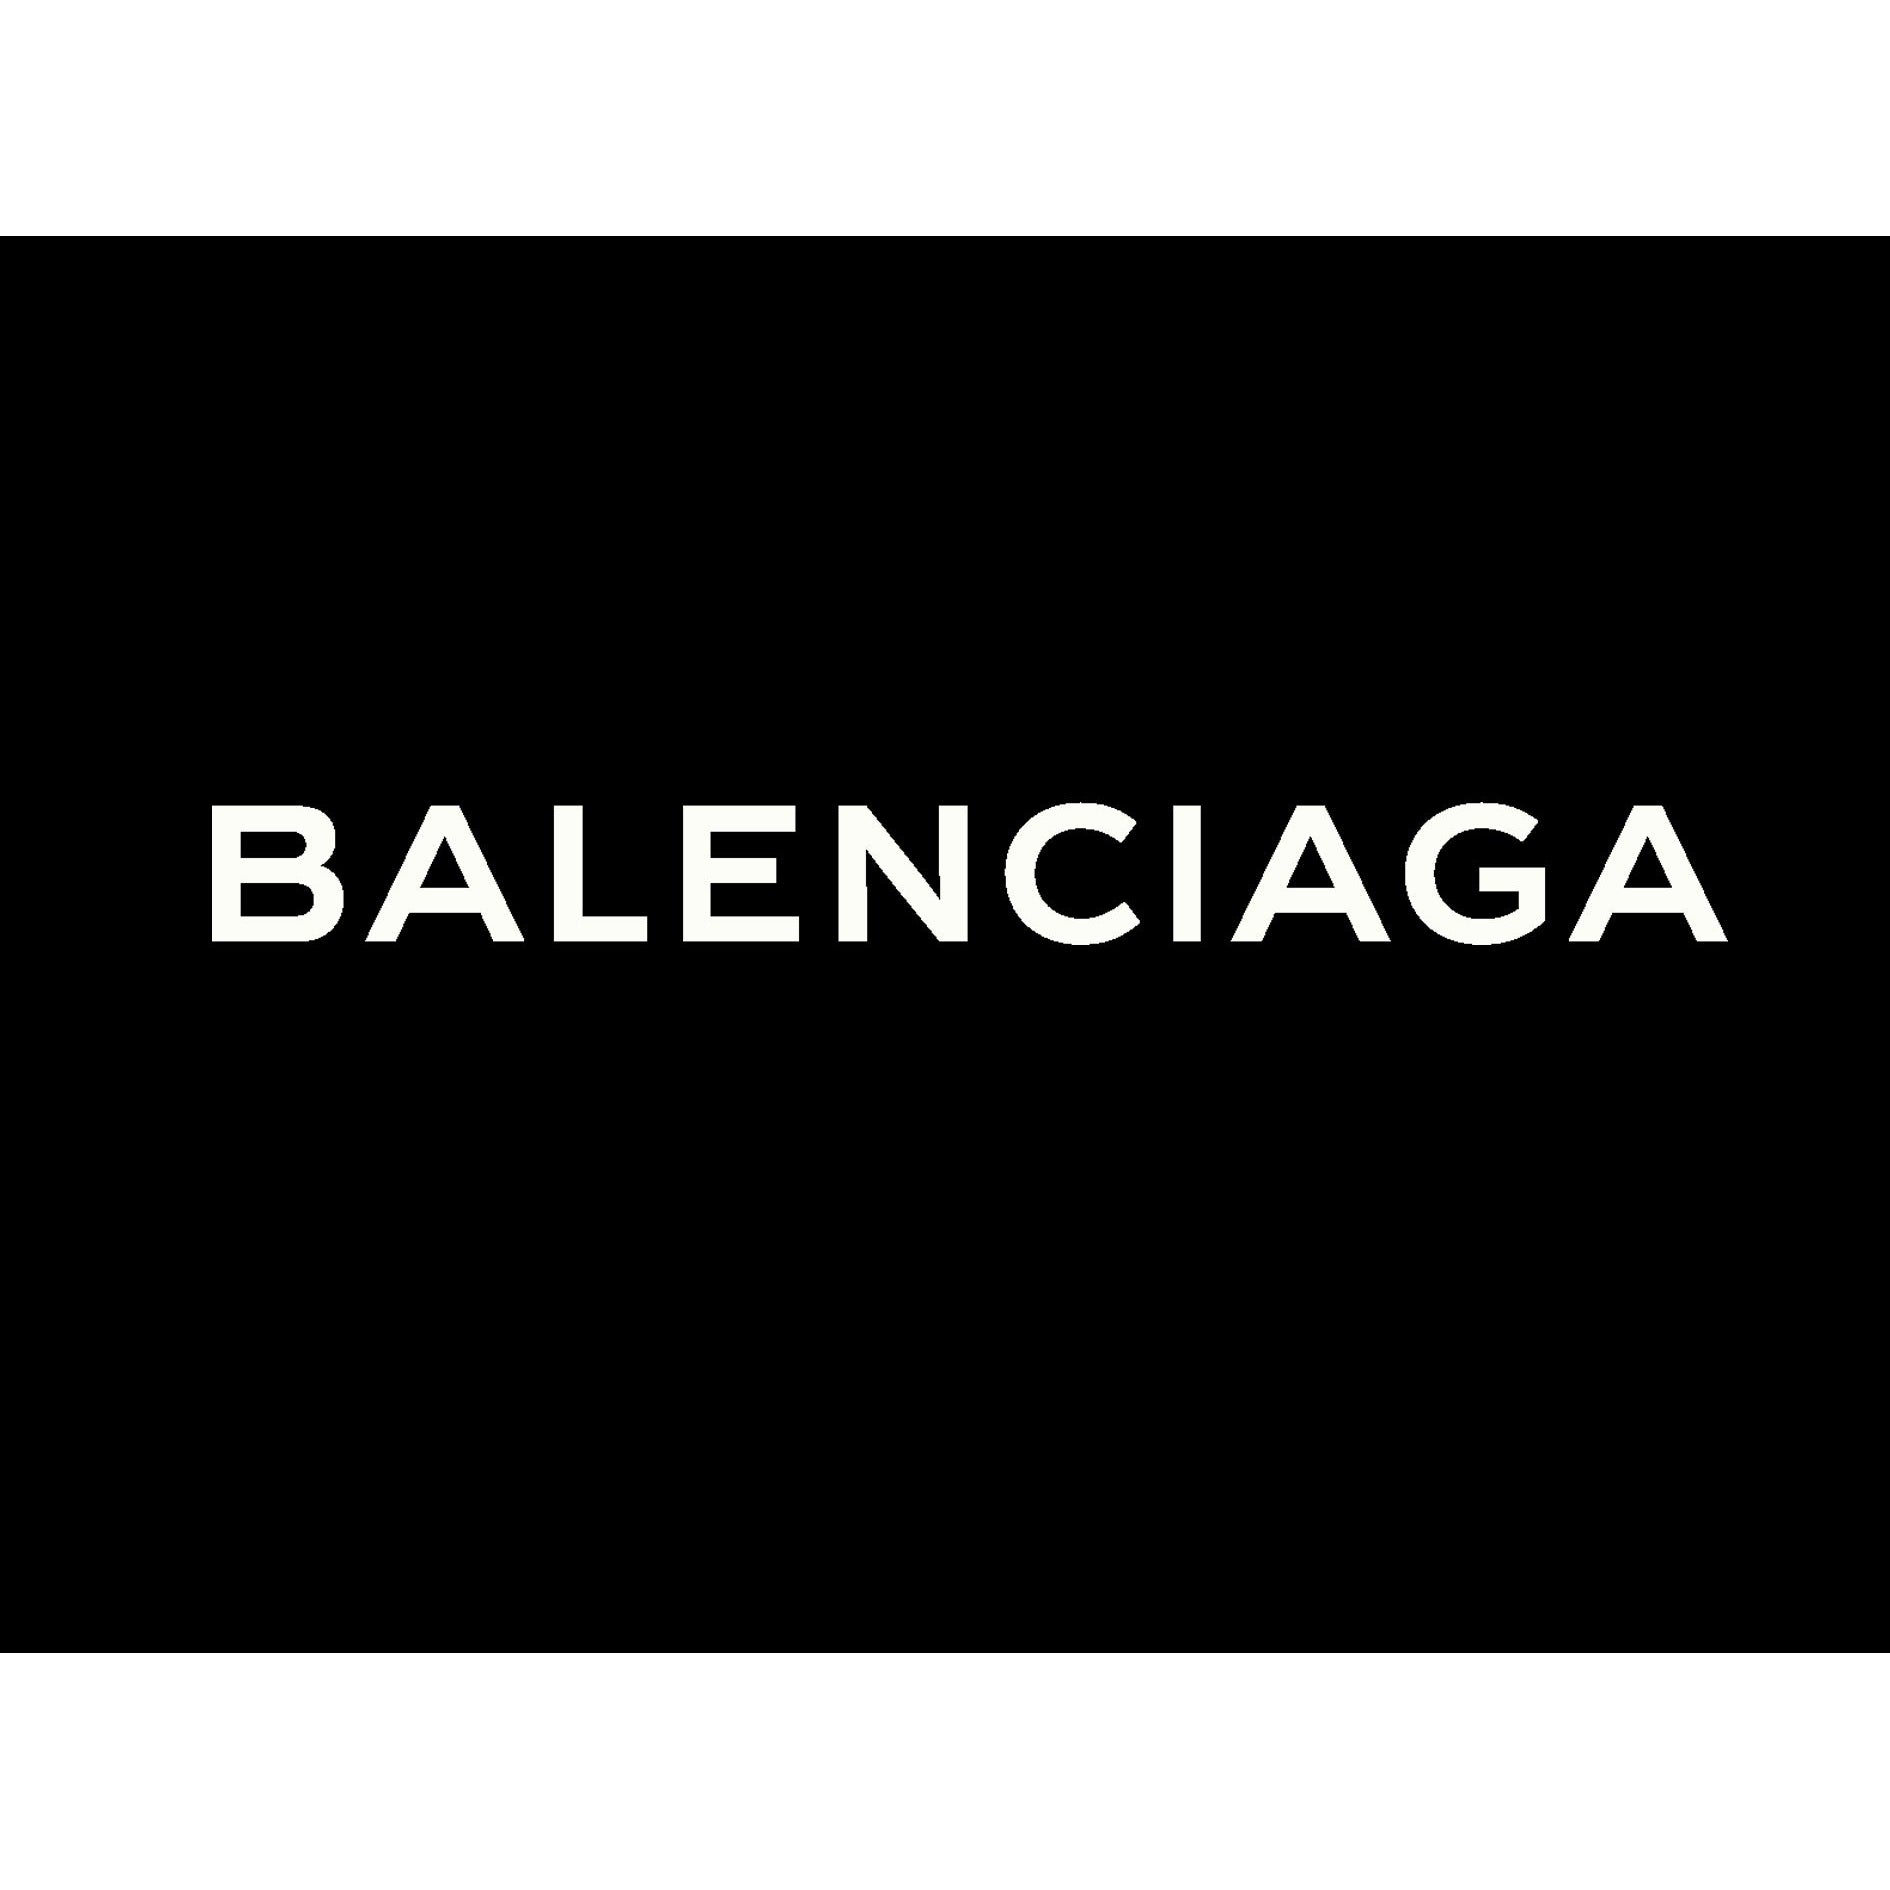 Balenciaga Fashion Brand Logo Editorial Stock Image  Image of logo  symbol 120231464